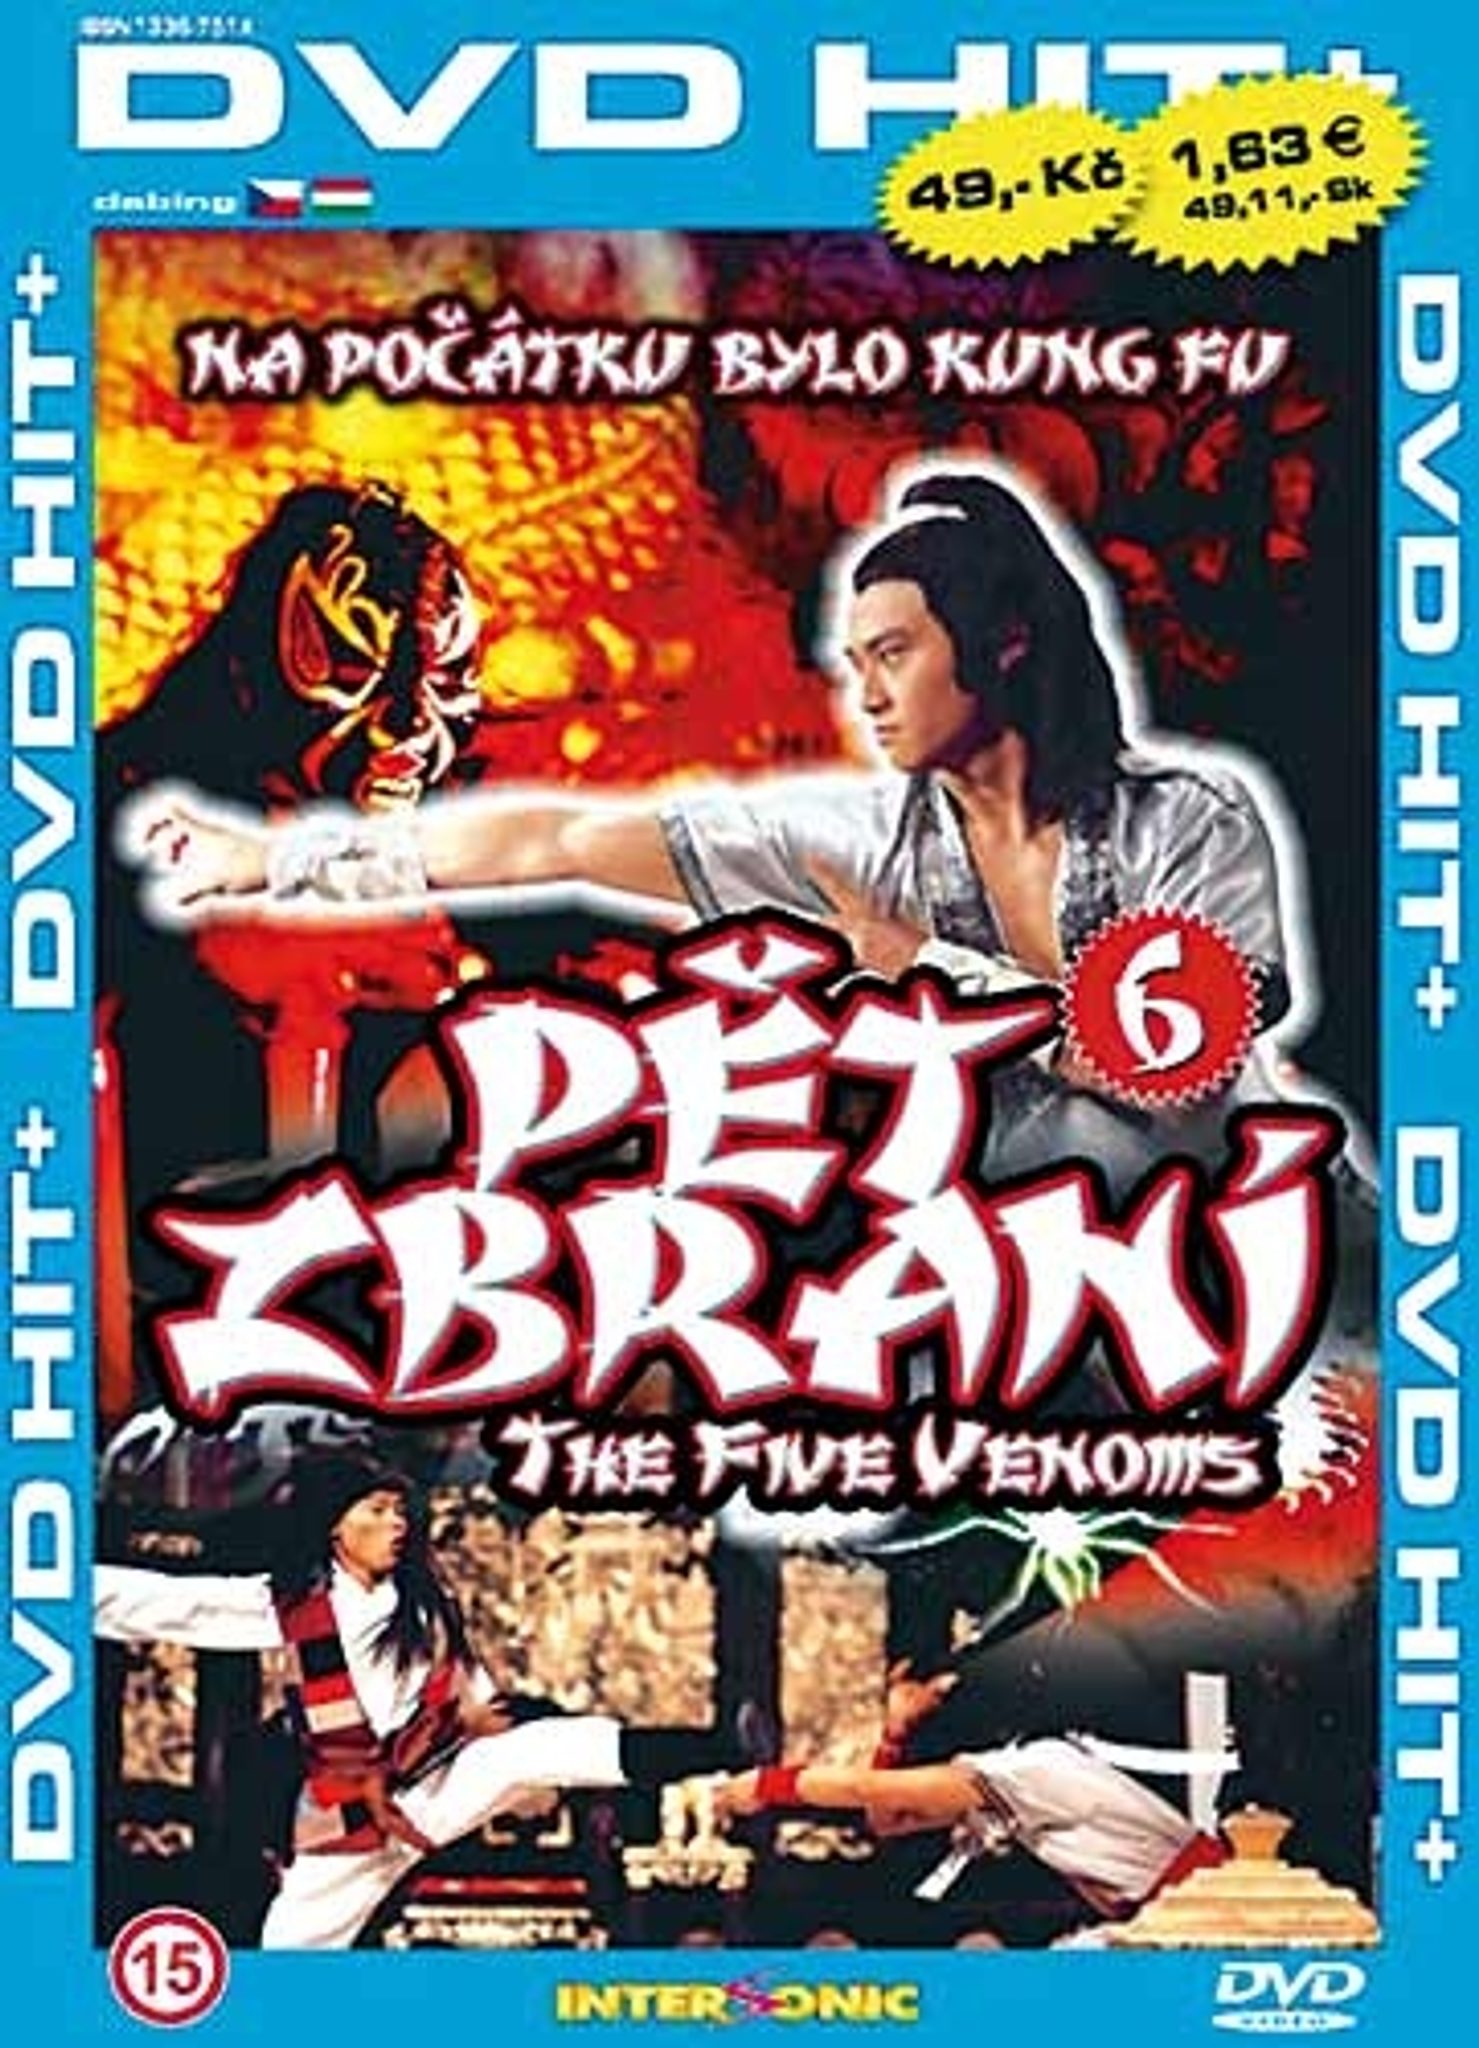 DVD Shaolin 6 Pt zbran